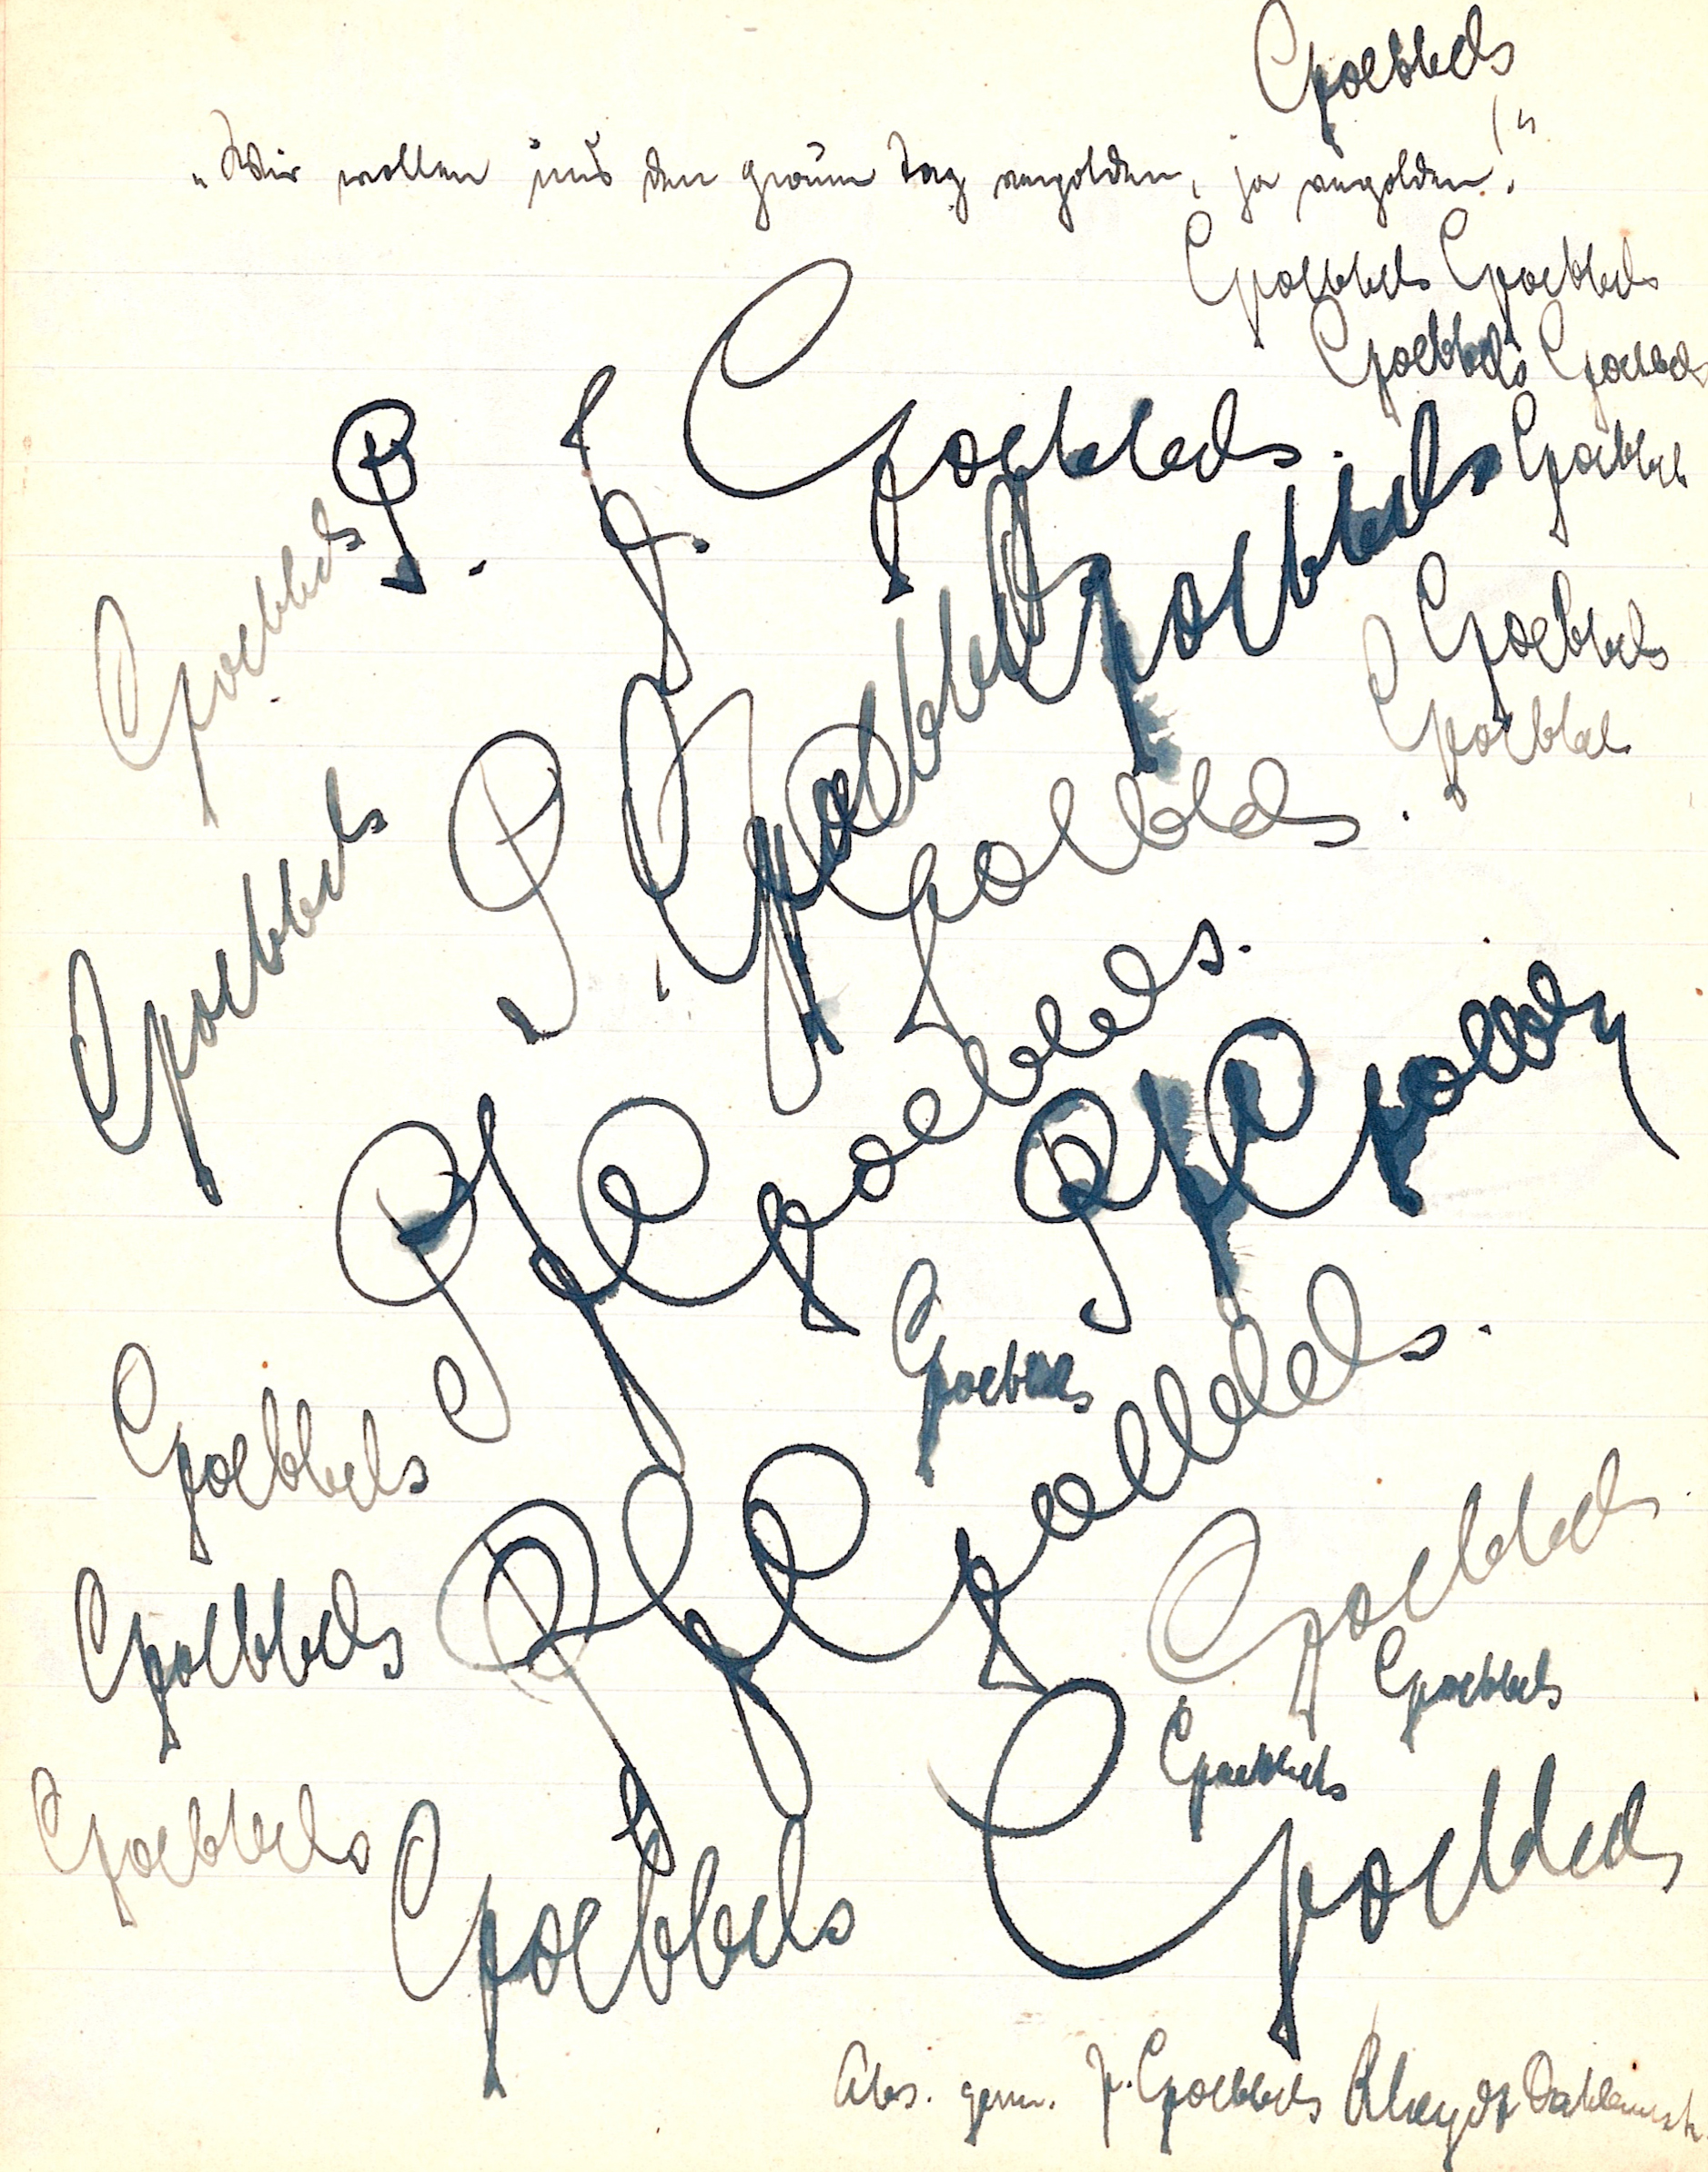 Goebbels-signatures201308061601.jpg